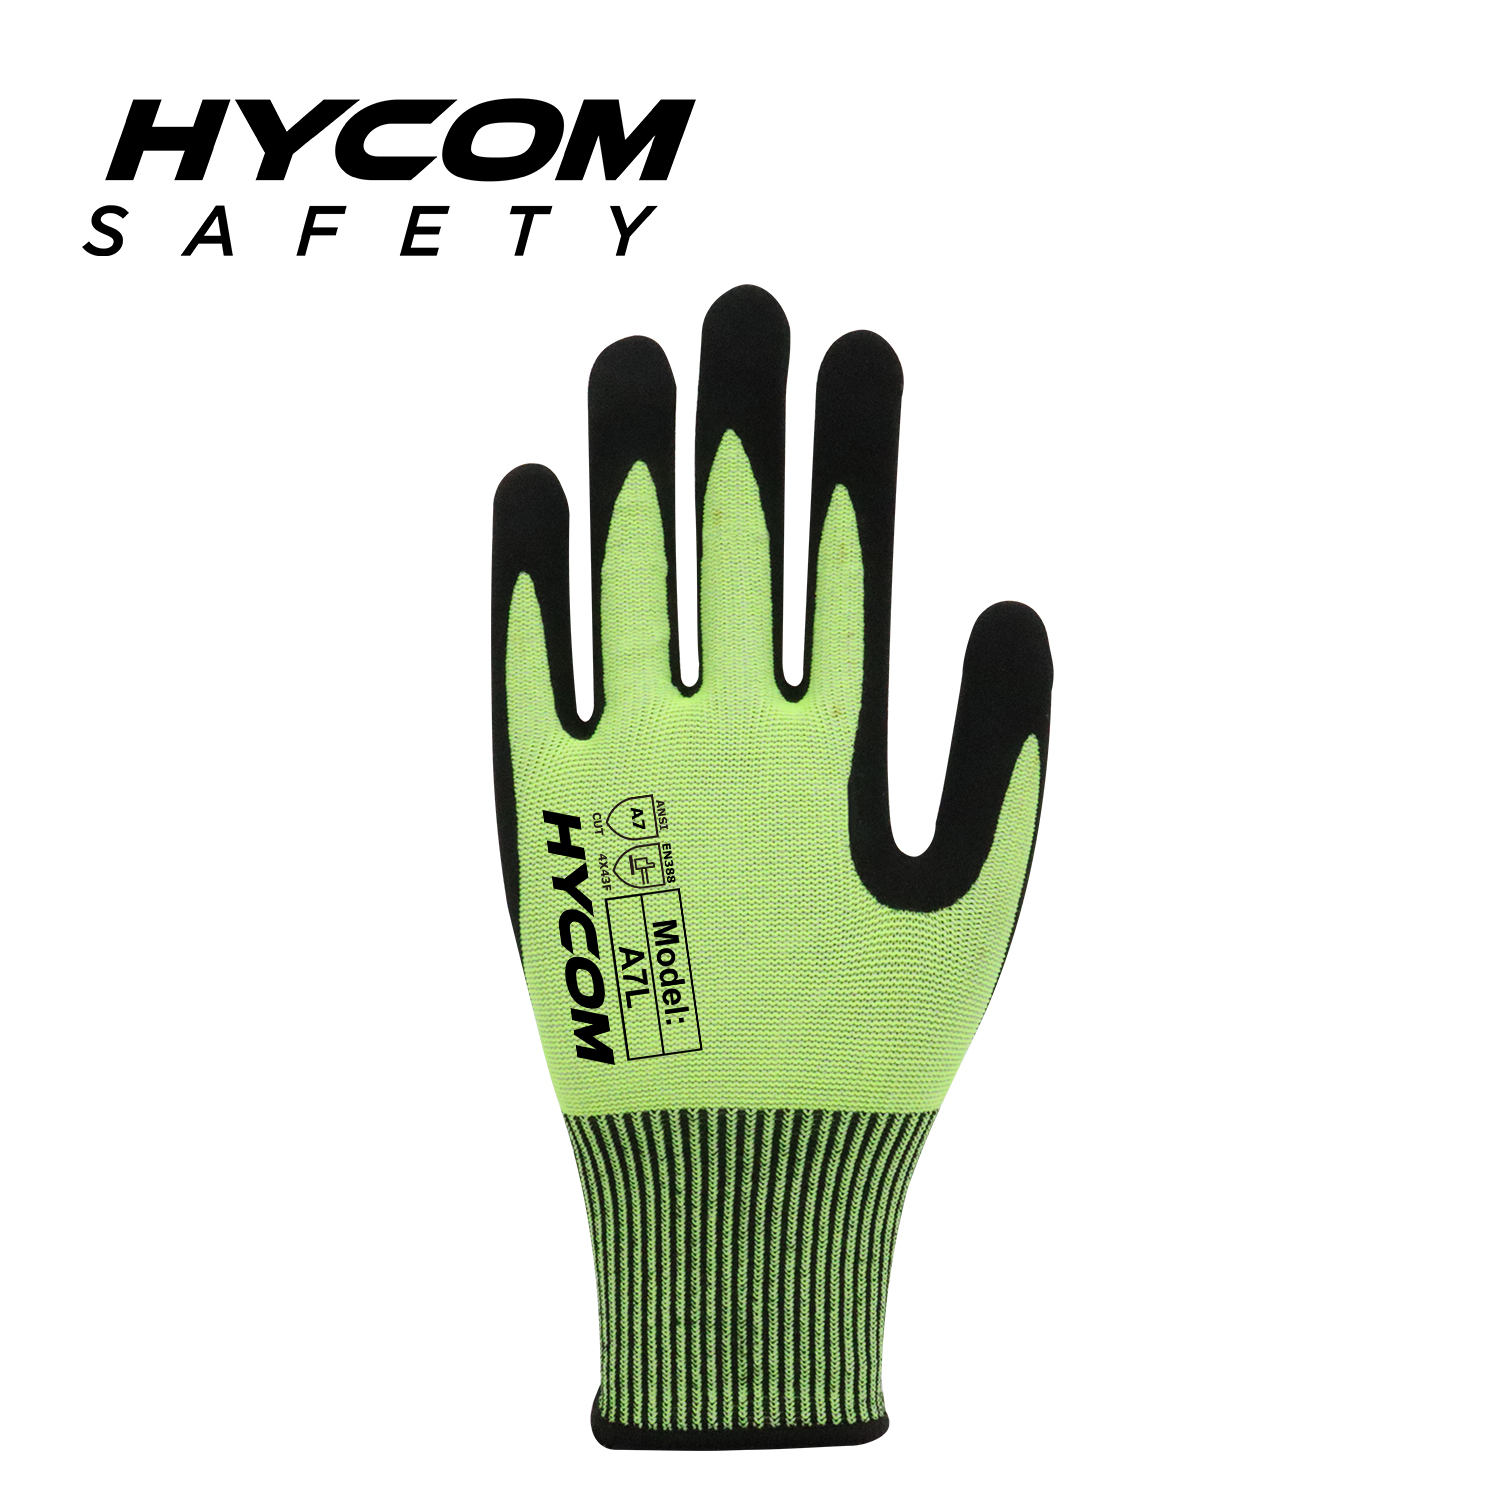 HYCOM 13G HPPE Fiber ANSI 7 Cut Resistant Glove Palm Nitrile Dipped Safety Gloves for Work